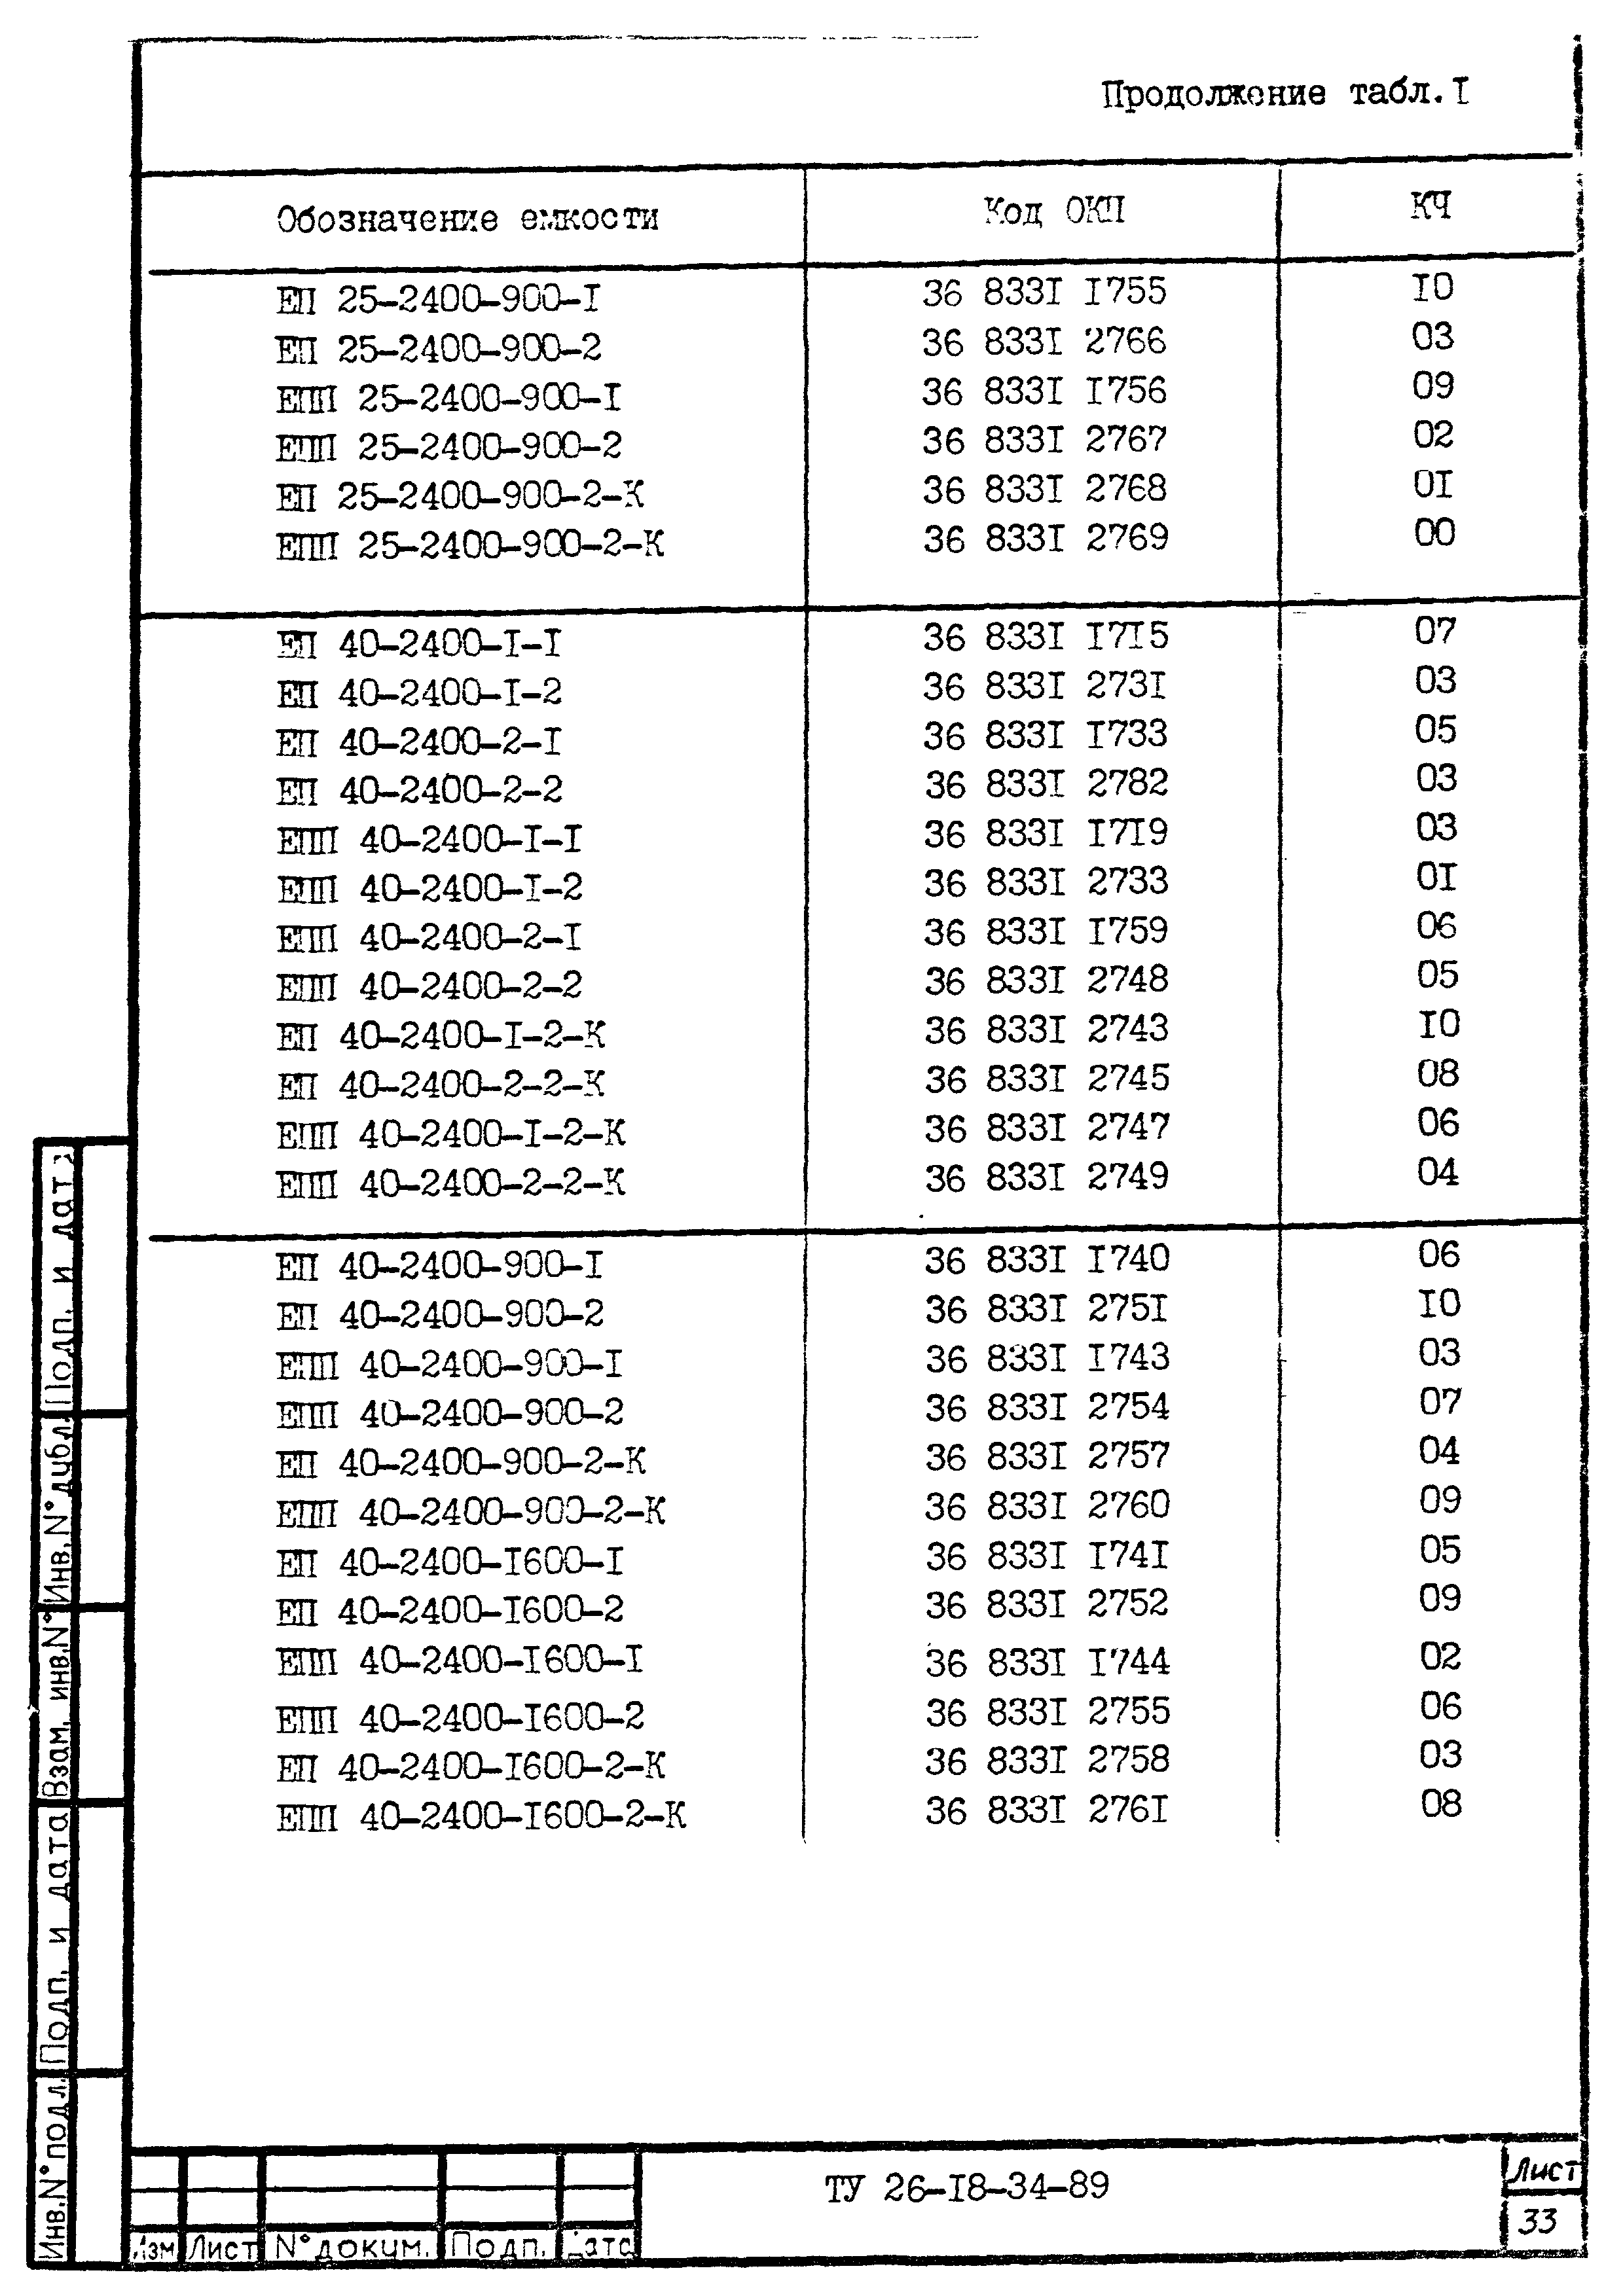 ТУ 26-18-34-89